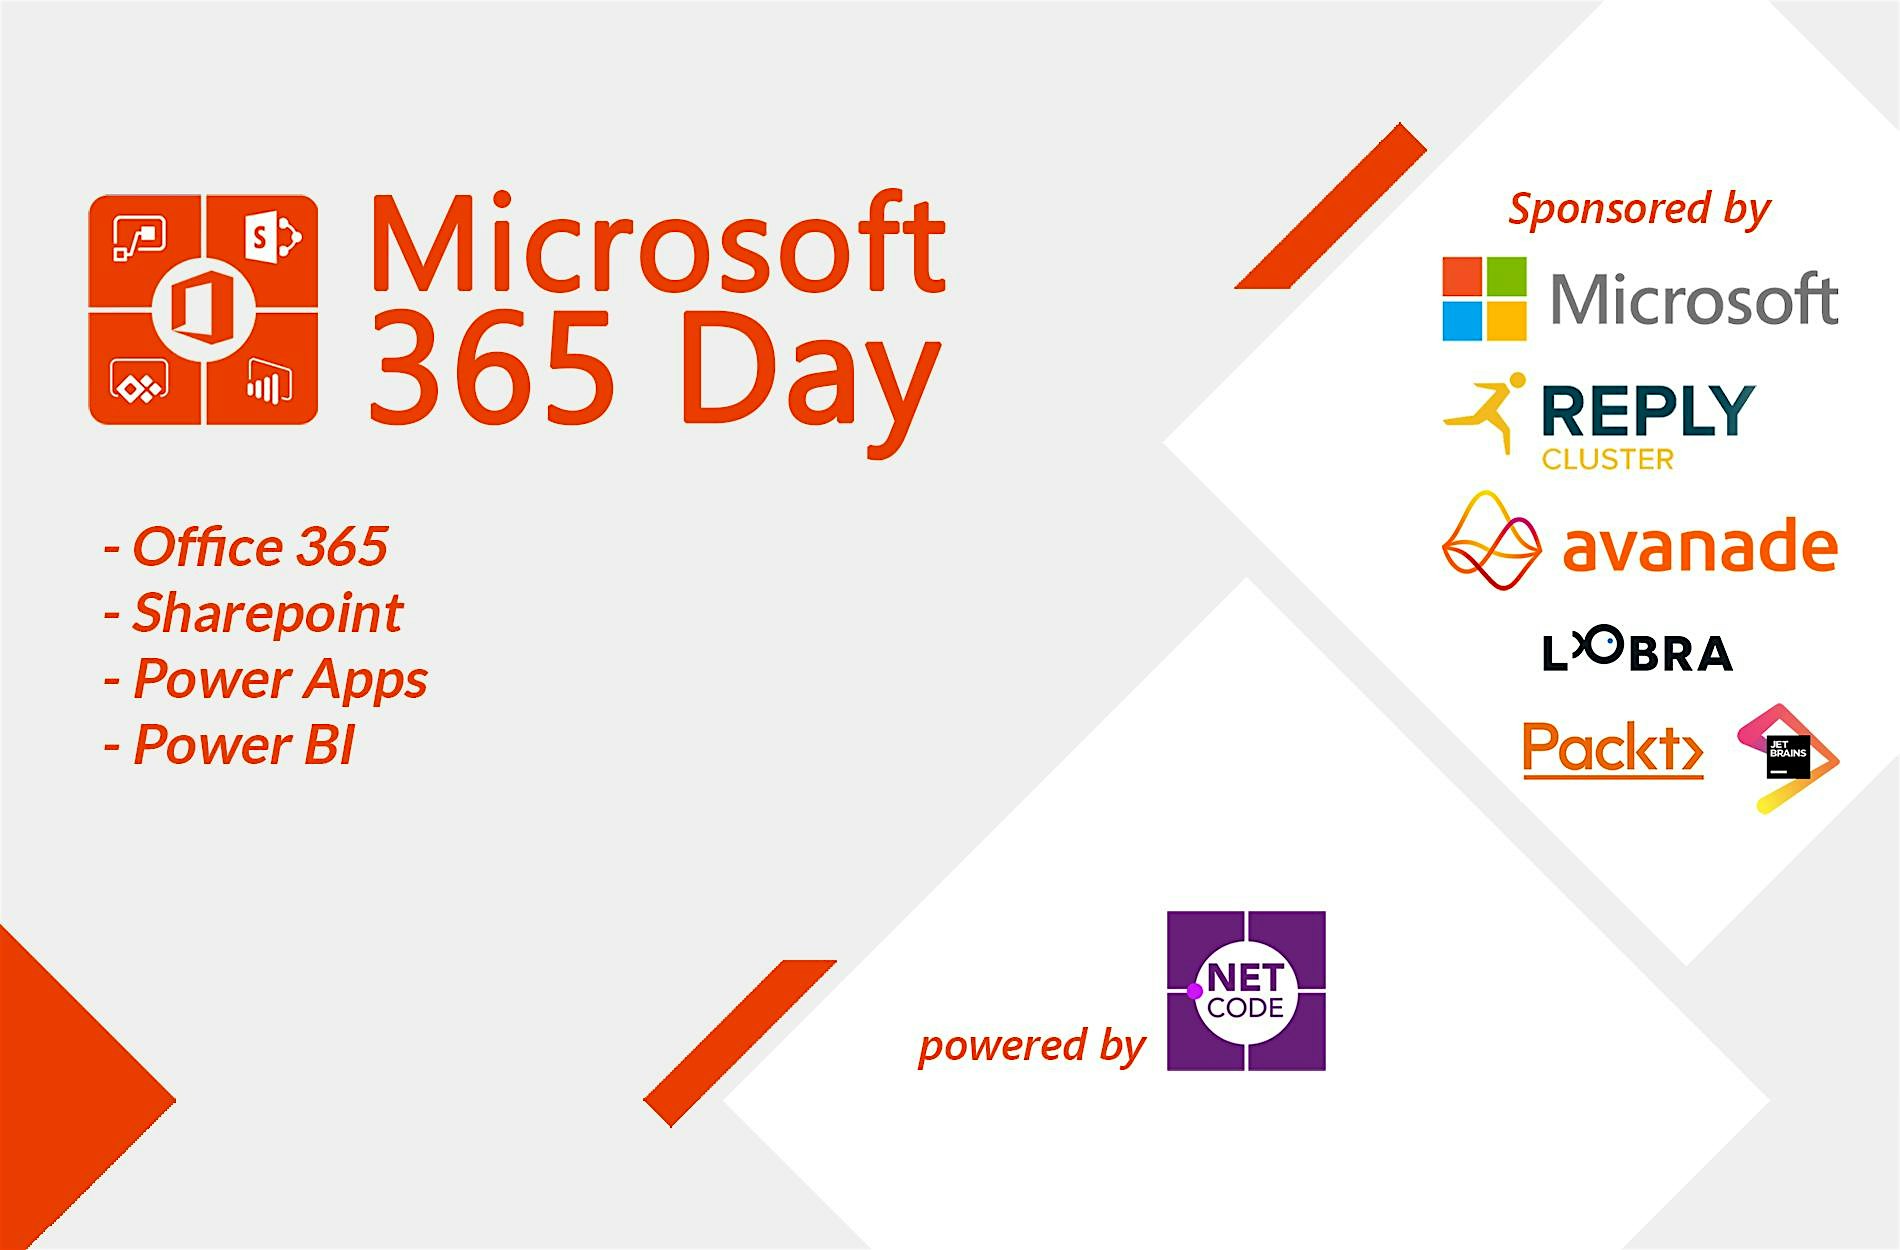 Microsoft 365 Day 2020